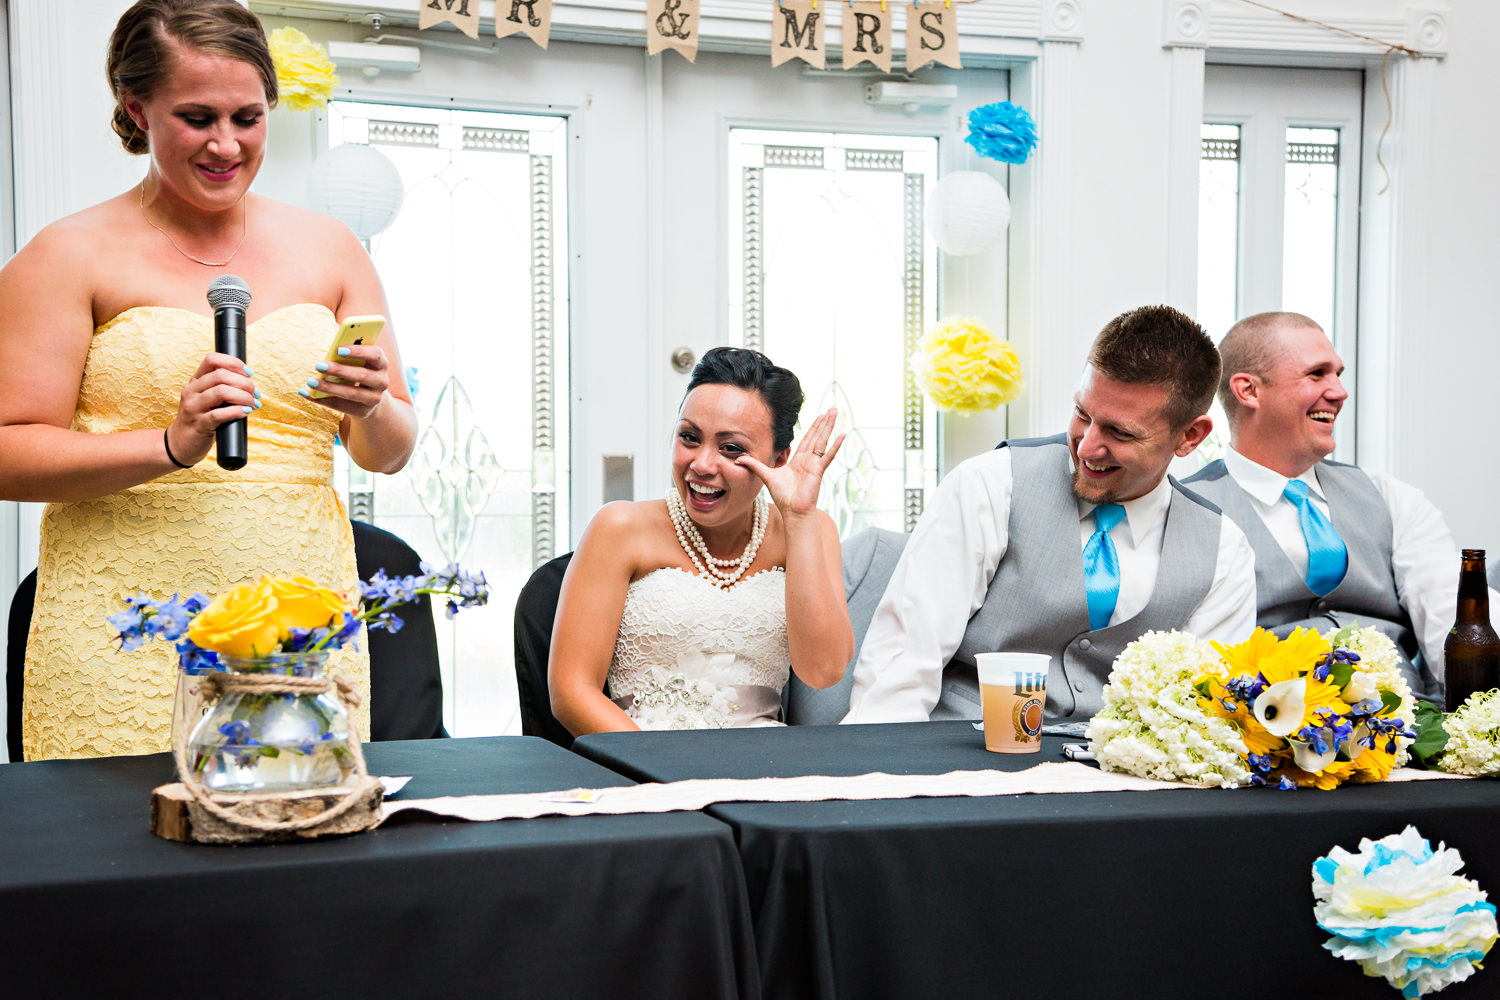 billings-montana-chanceys-wedding-reception-bride-cries-during-toasts.jpg